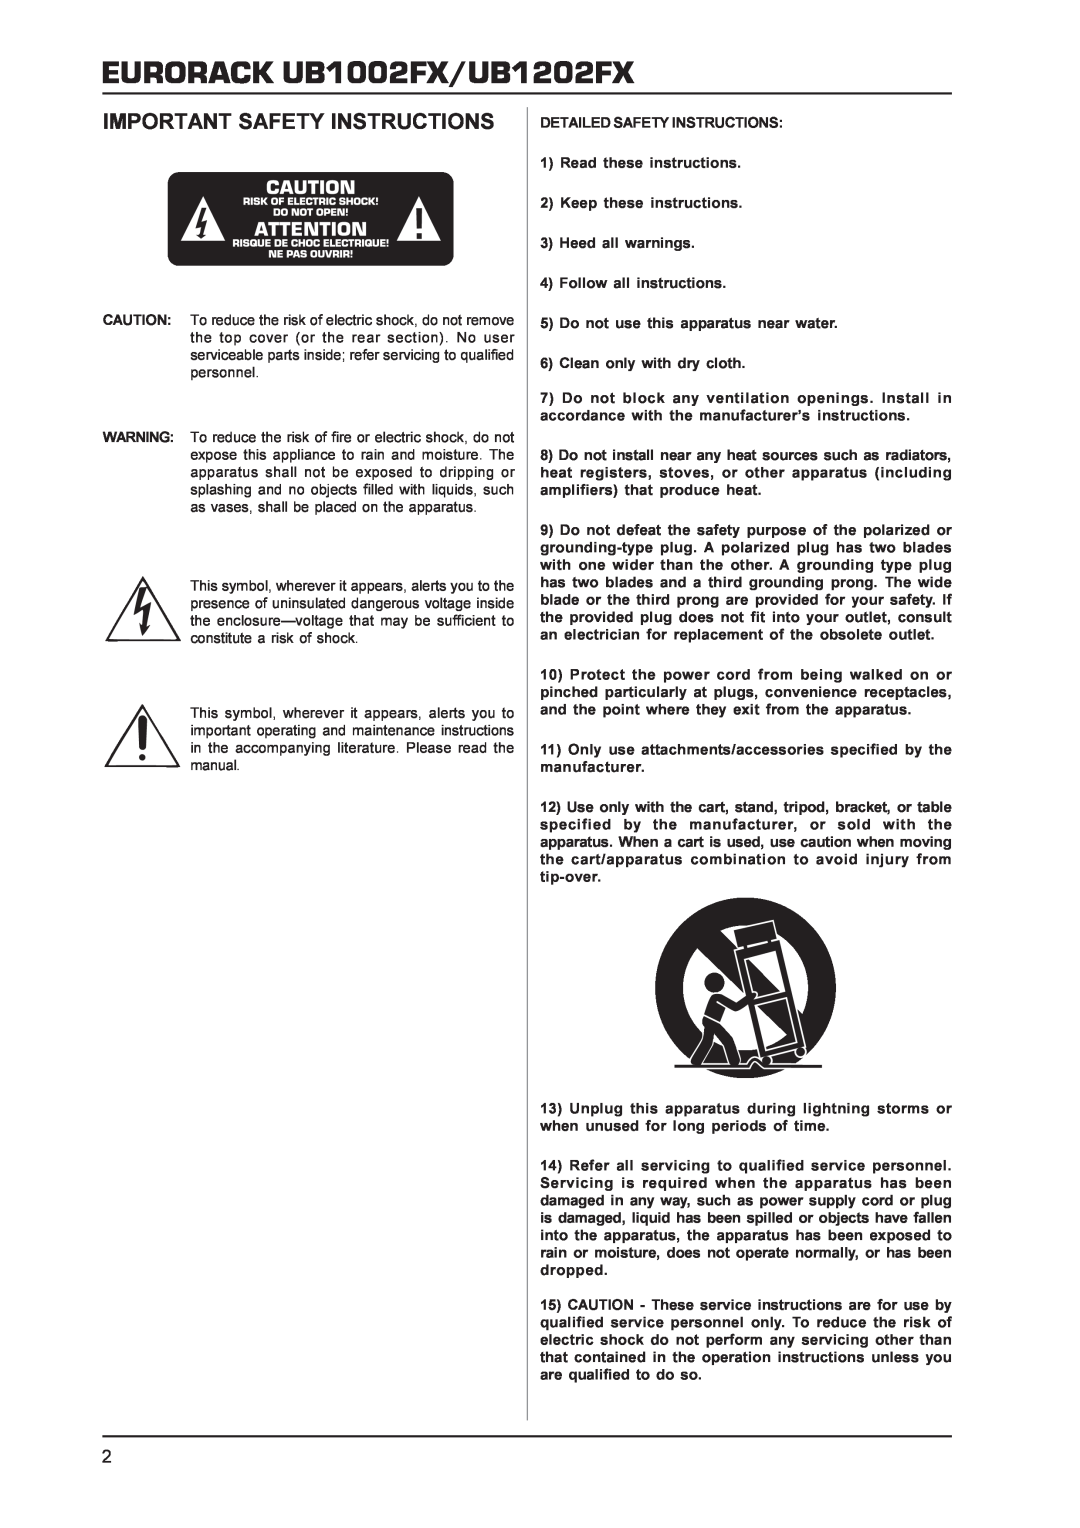 Behringer manual EURORACK UB1002FX/UB1202FX, Important Safety Instructions 